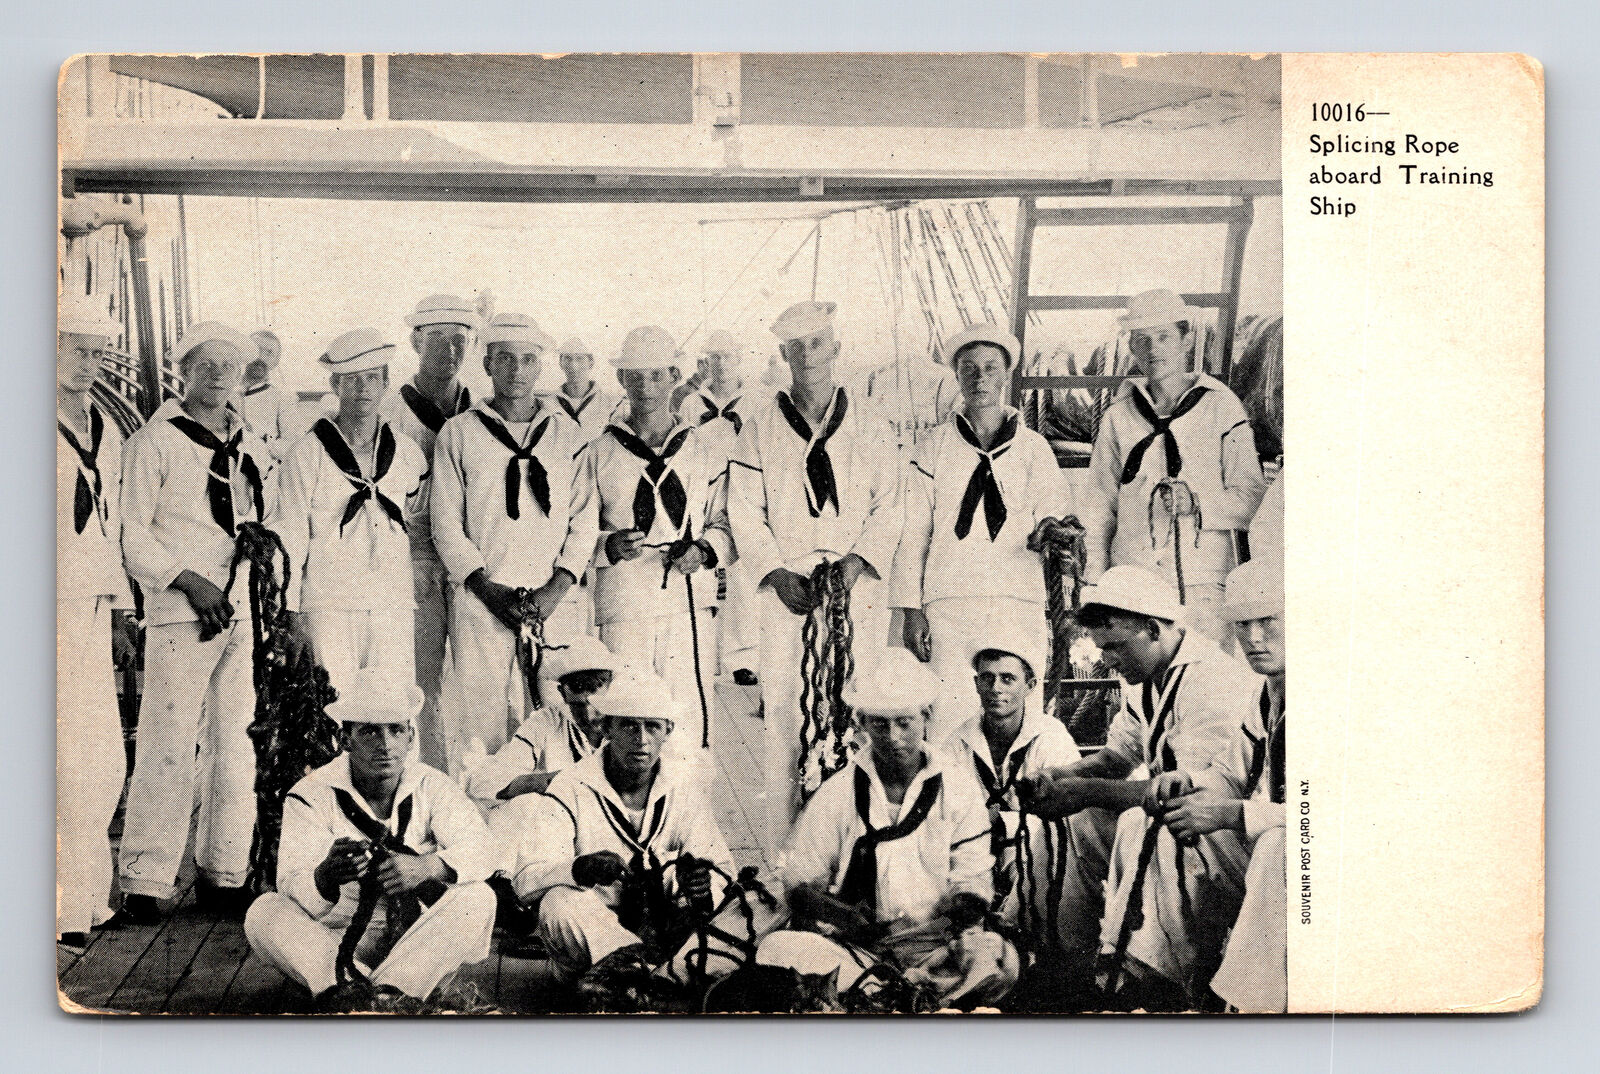 Sailors Splicing Learning Rope aboard Training Ship Souvenir Post Card Postcard